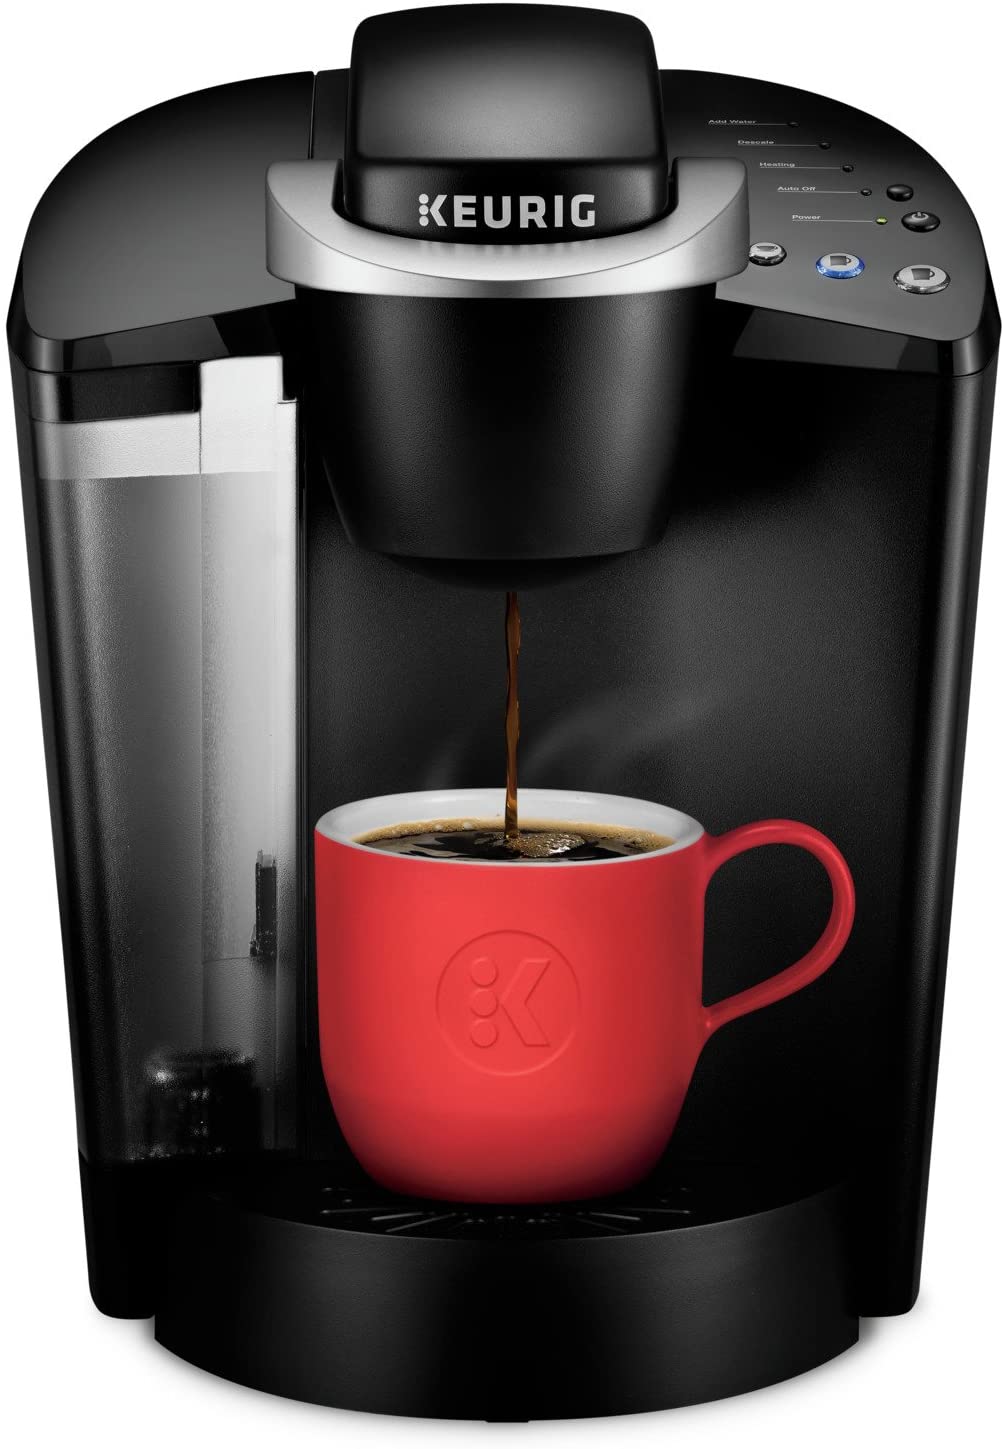 Keurig single-serve coffee maker - WorkwearToronto.com - Best Gift Ideas for Christmas 2020 - Amazon